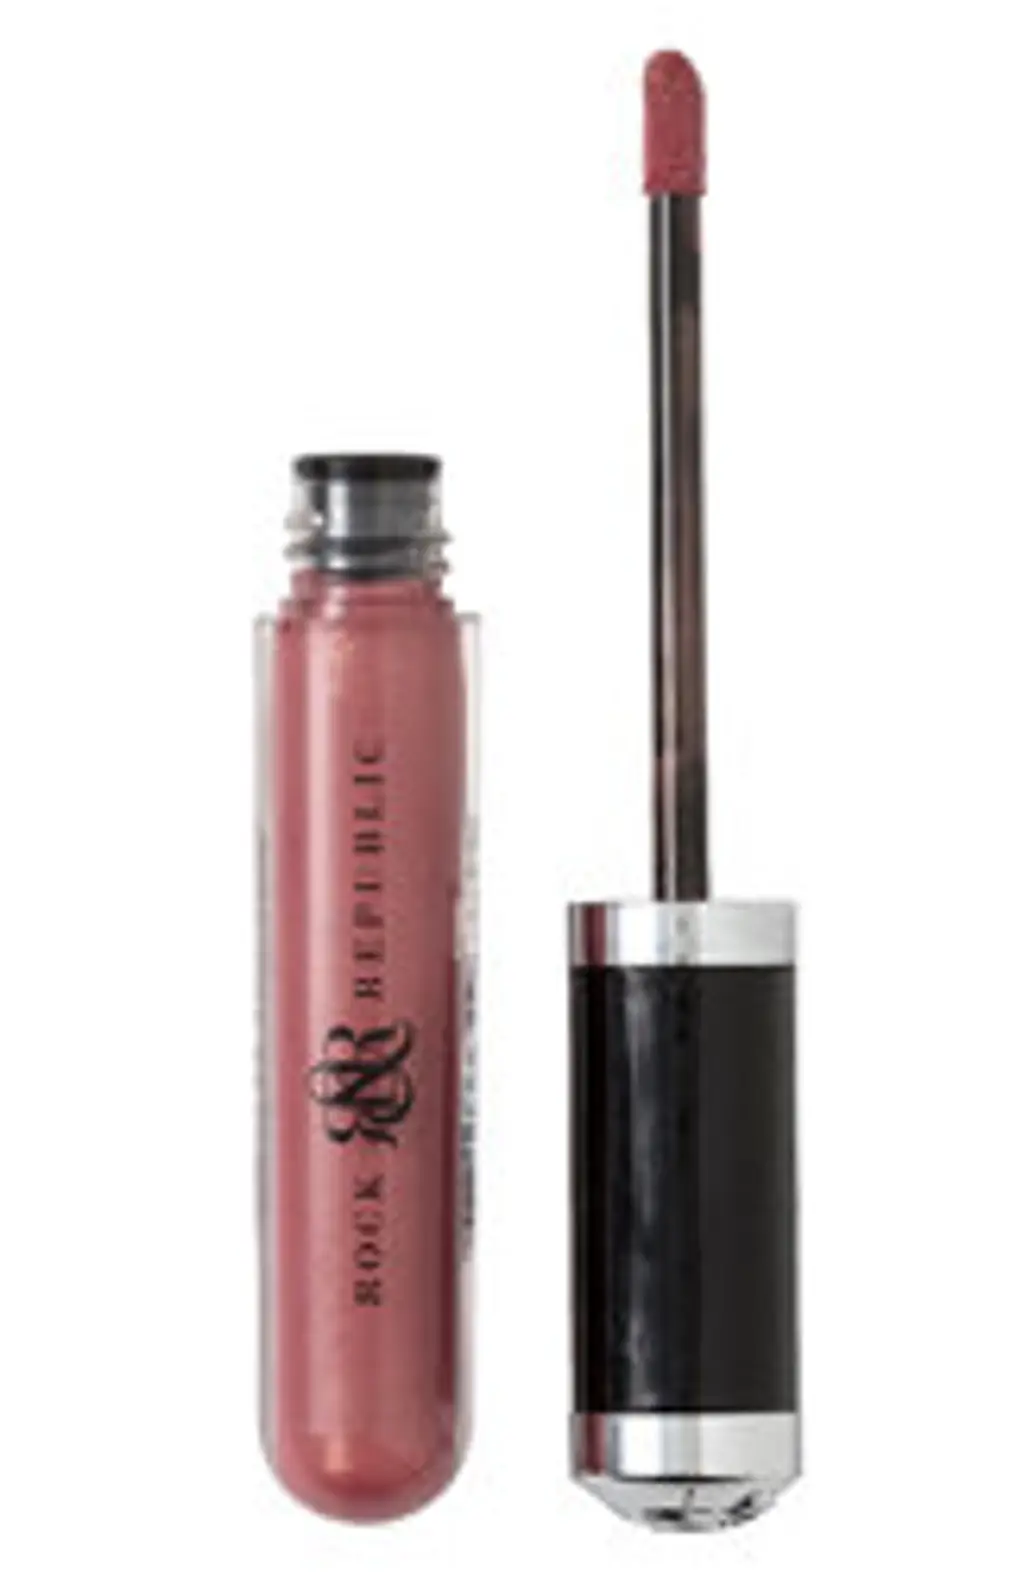 Rock & Republic 'Luxe' Lip Gloss